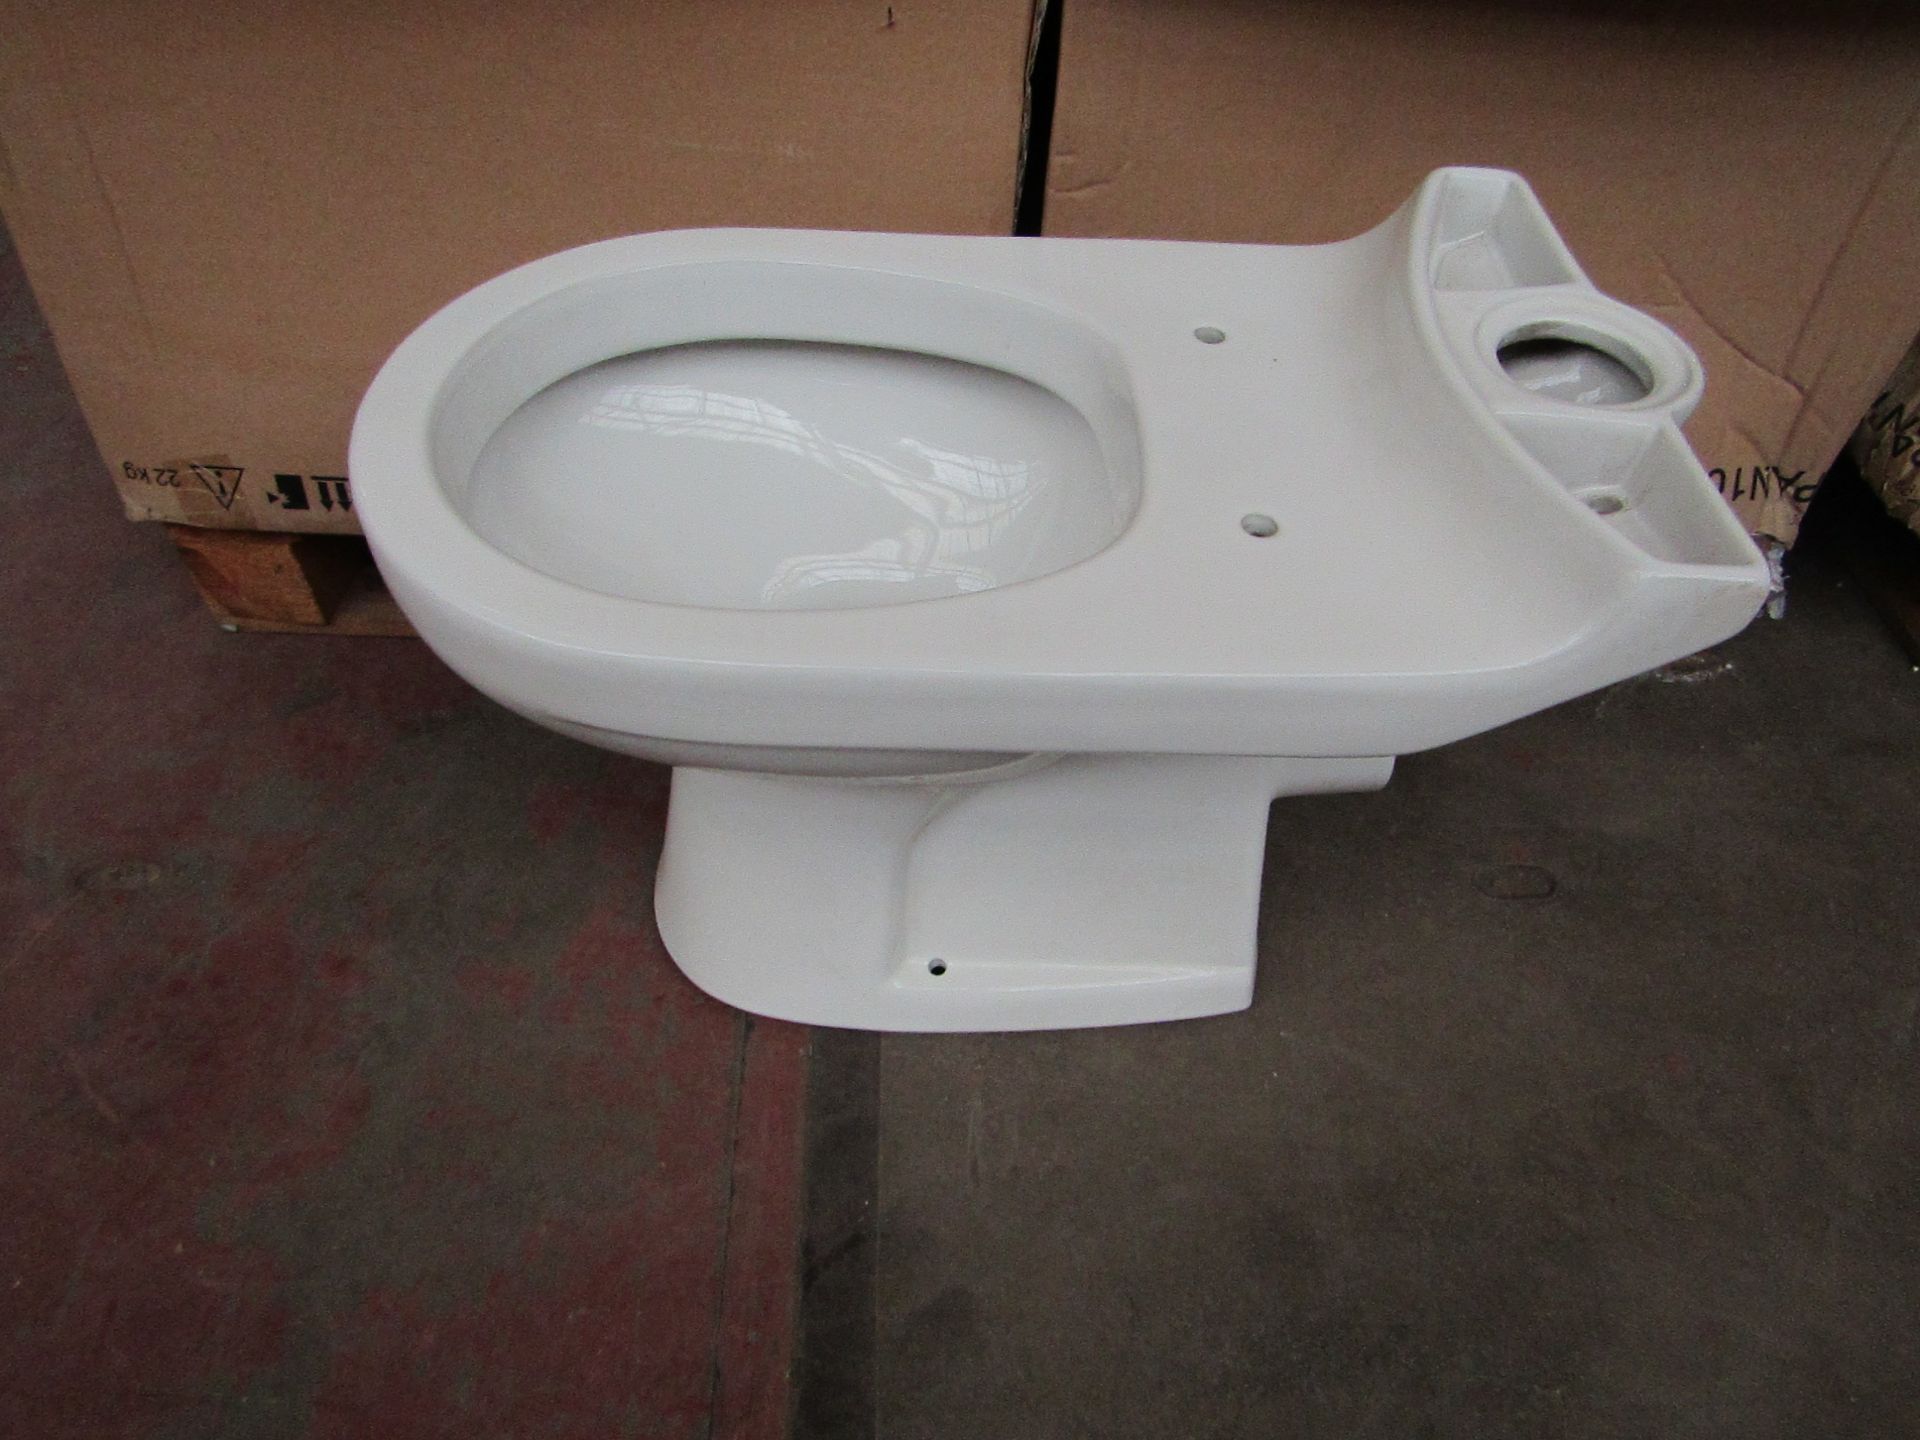 Victoria Plumb toilet pan PAN1060, new and boxed.